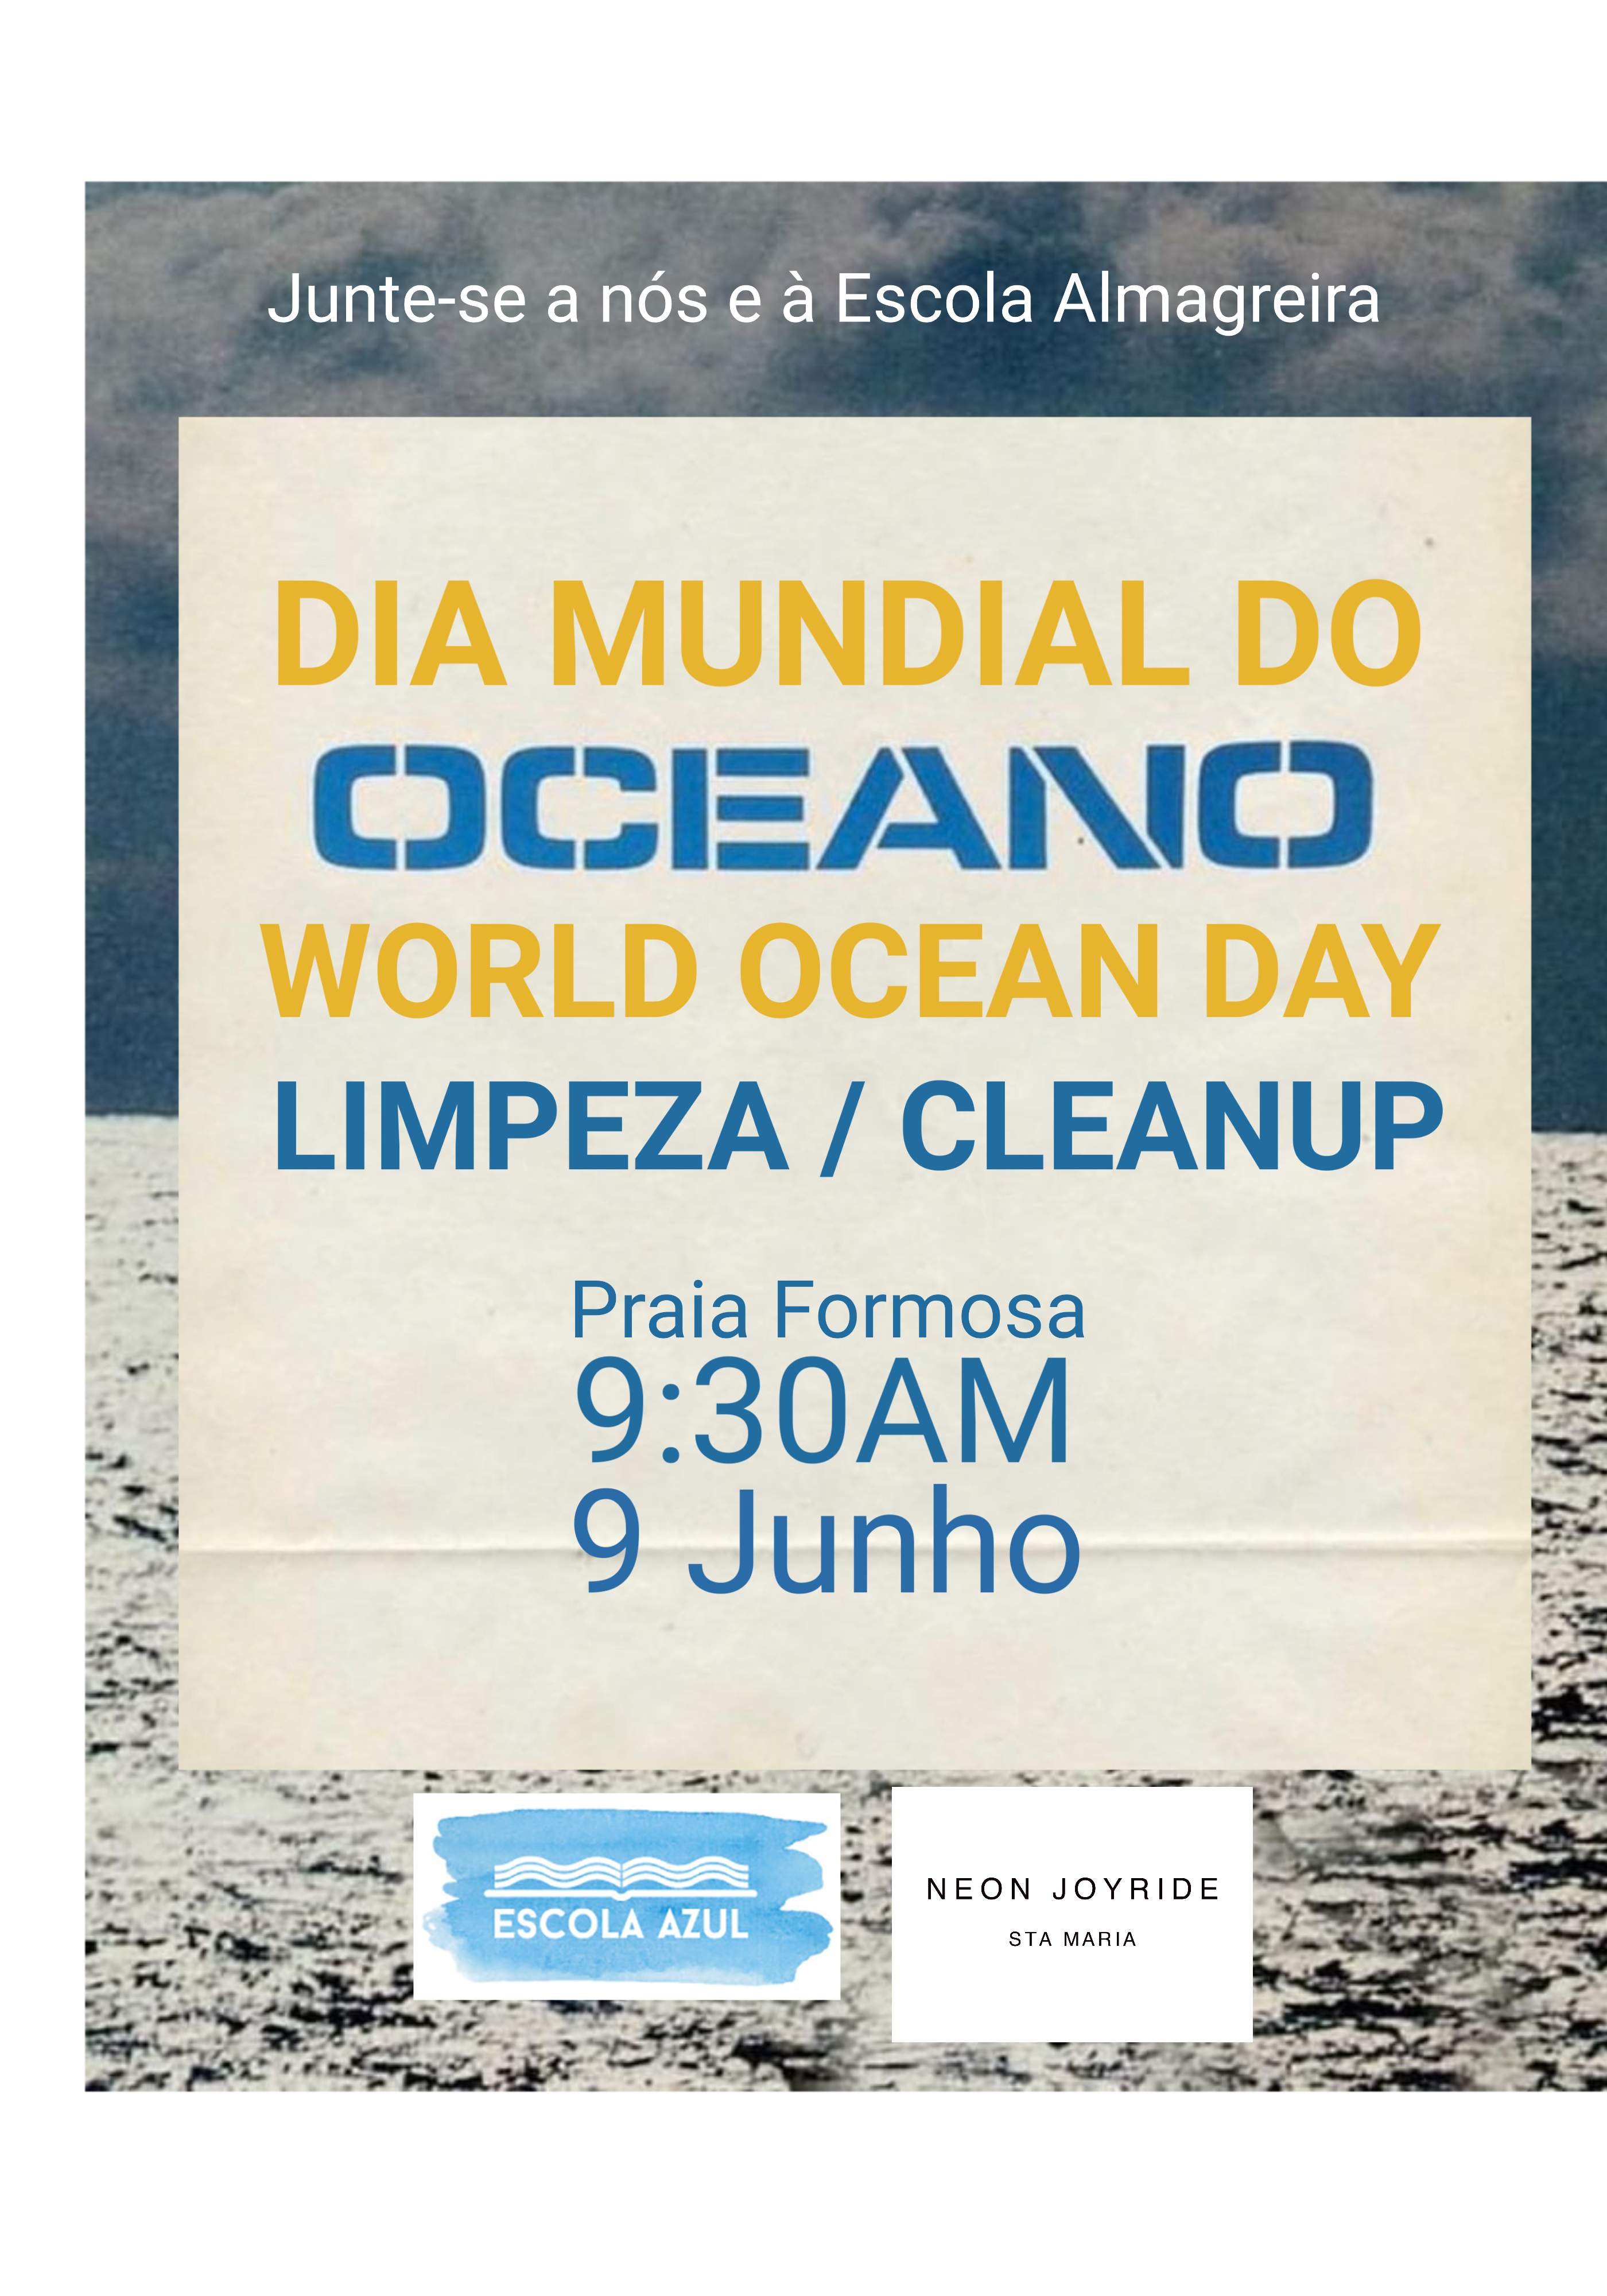 World Oceans Day Cleanup Event Neon Joyride Escola Azul